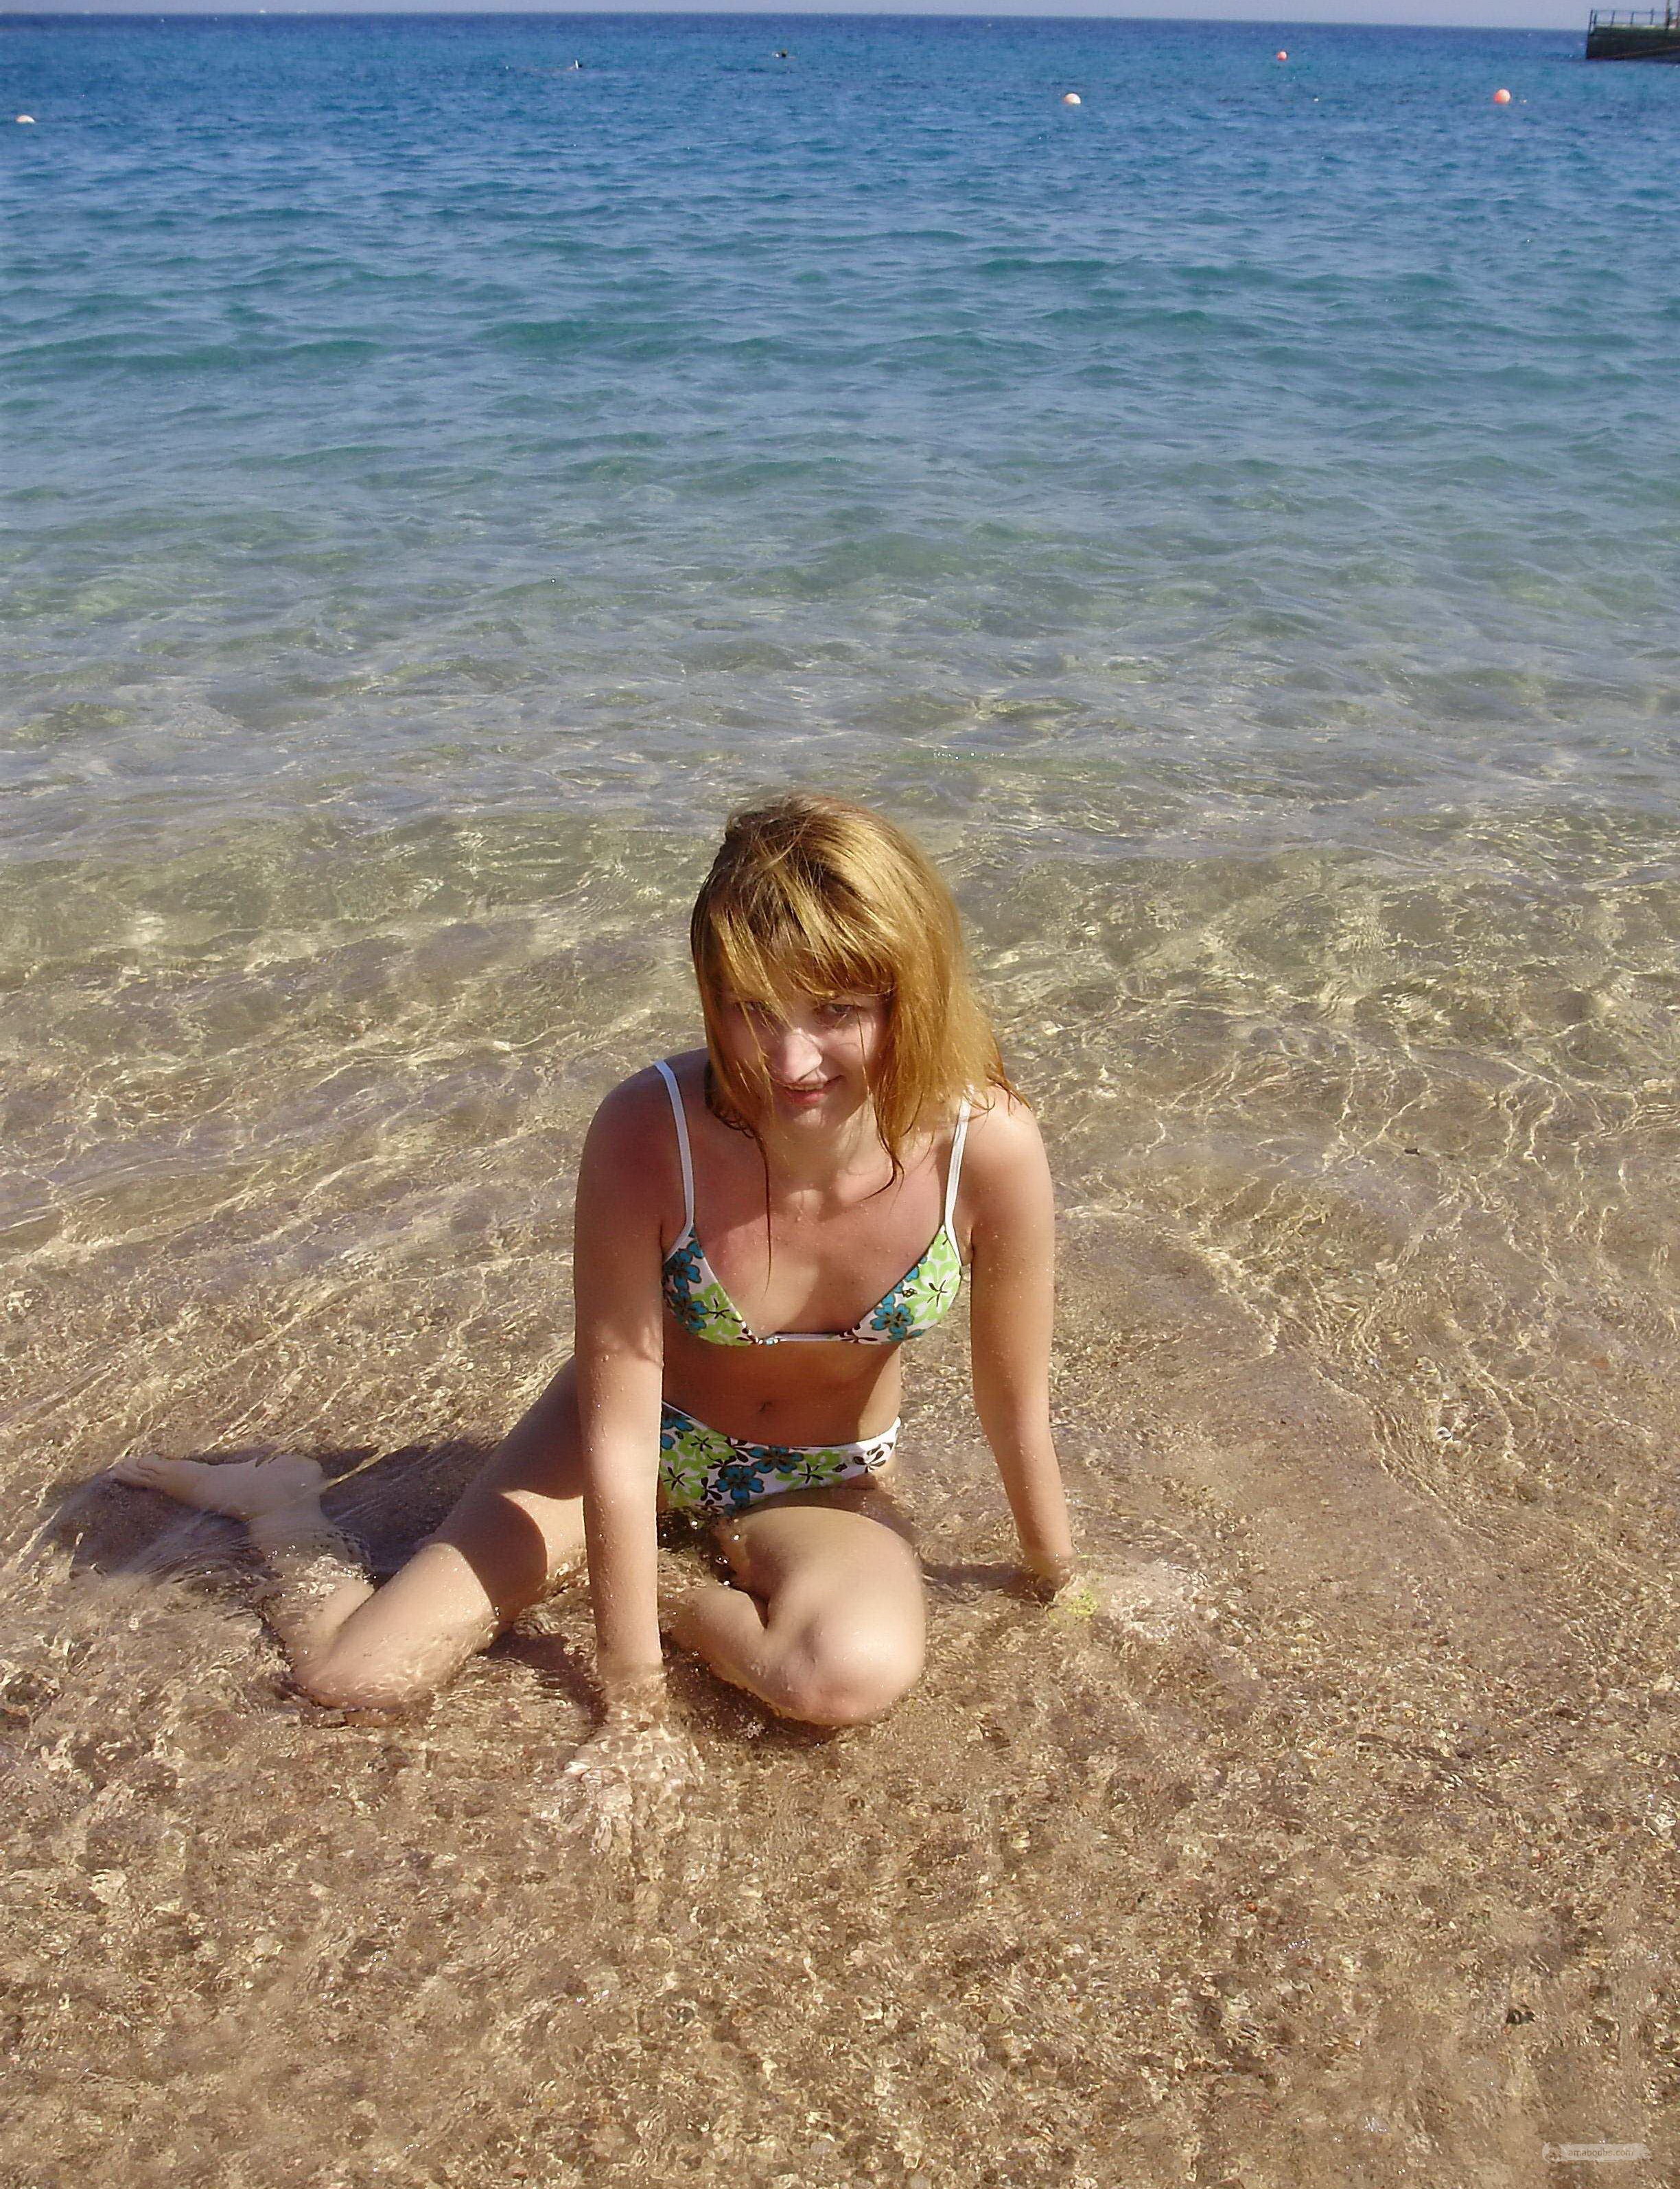 https://amaboobs.com/uploads/posts/2022-07/hot-girl-on-the-beach-307.jpg